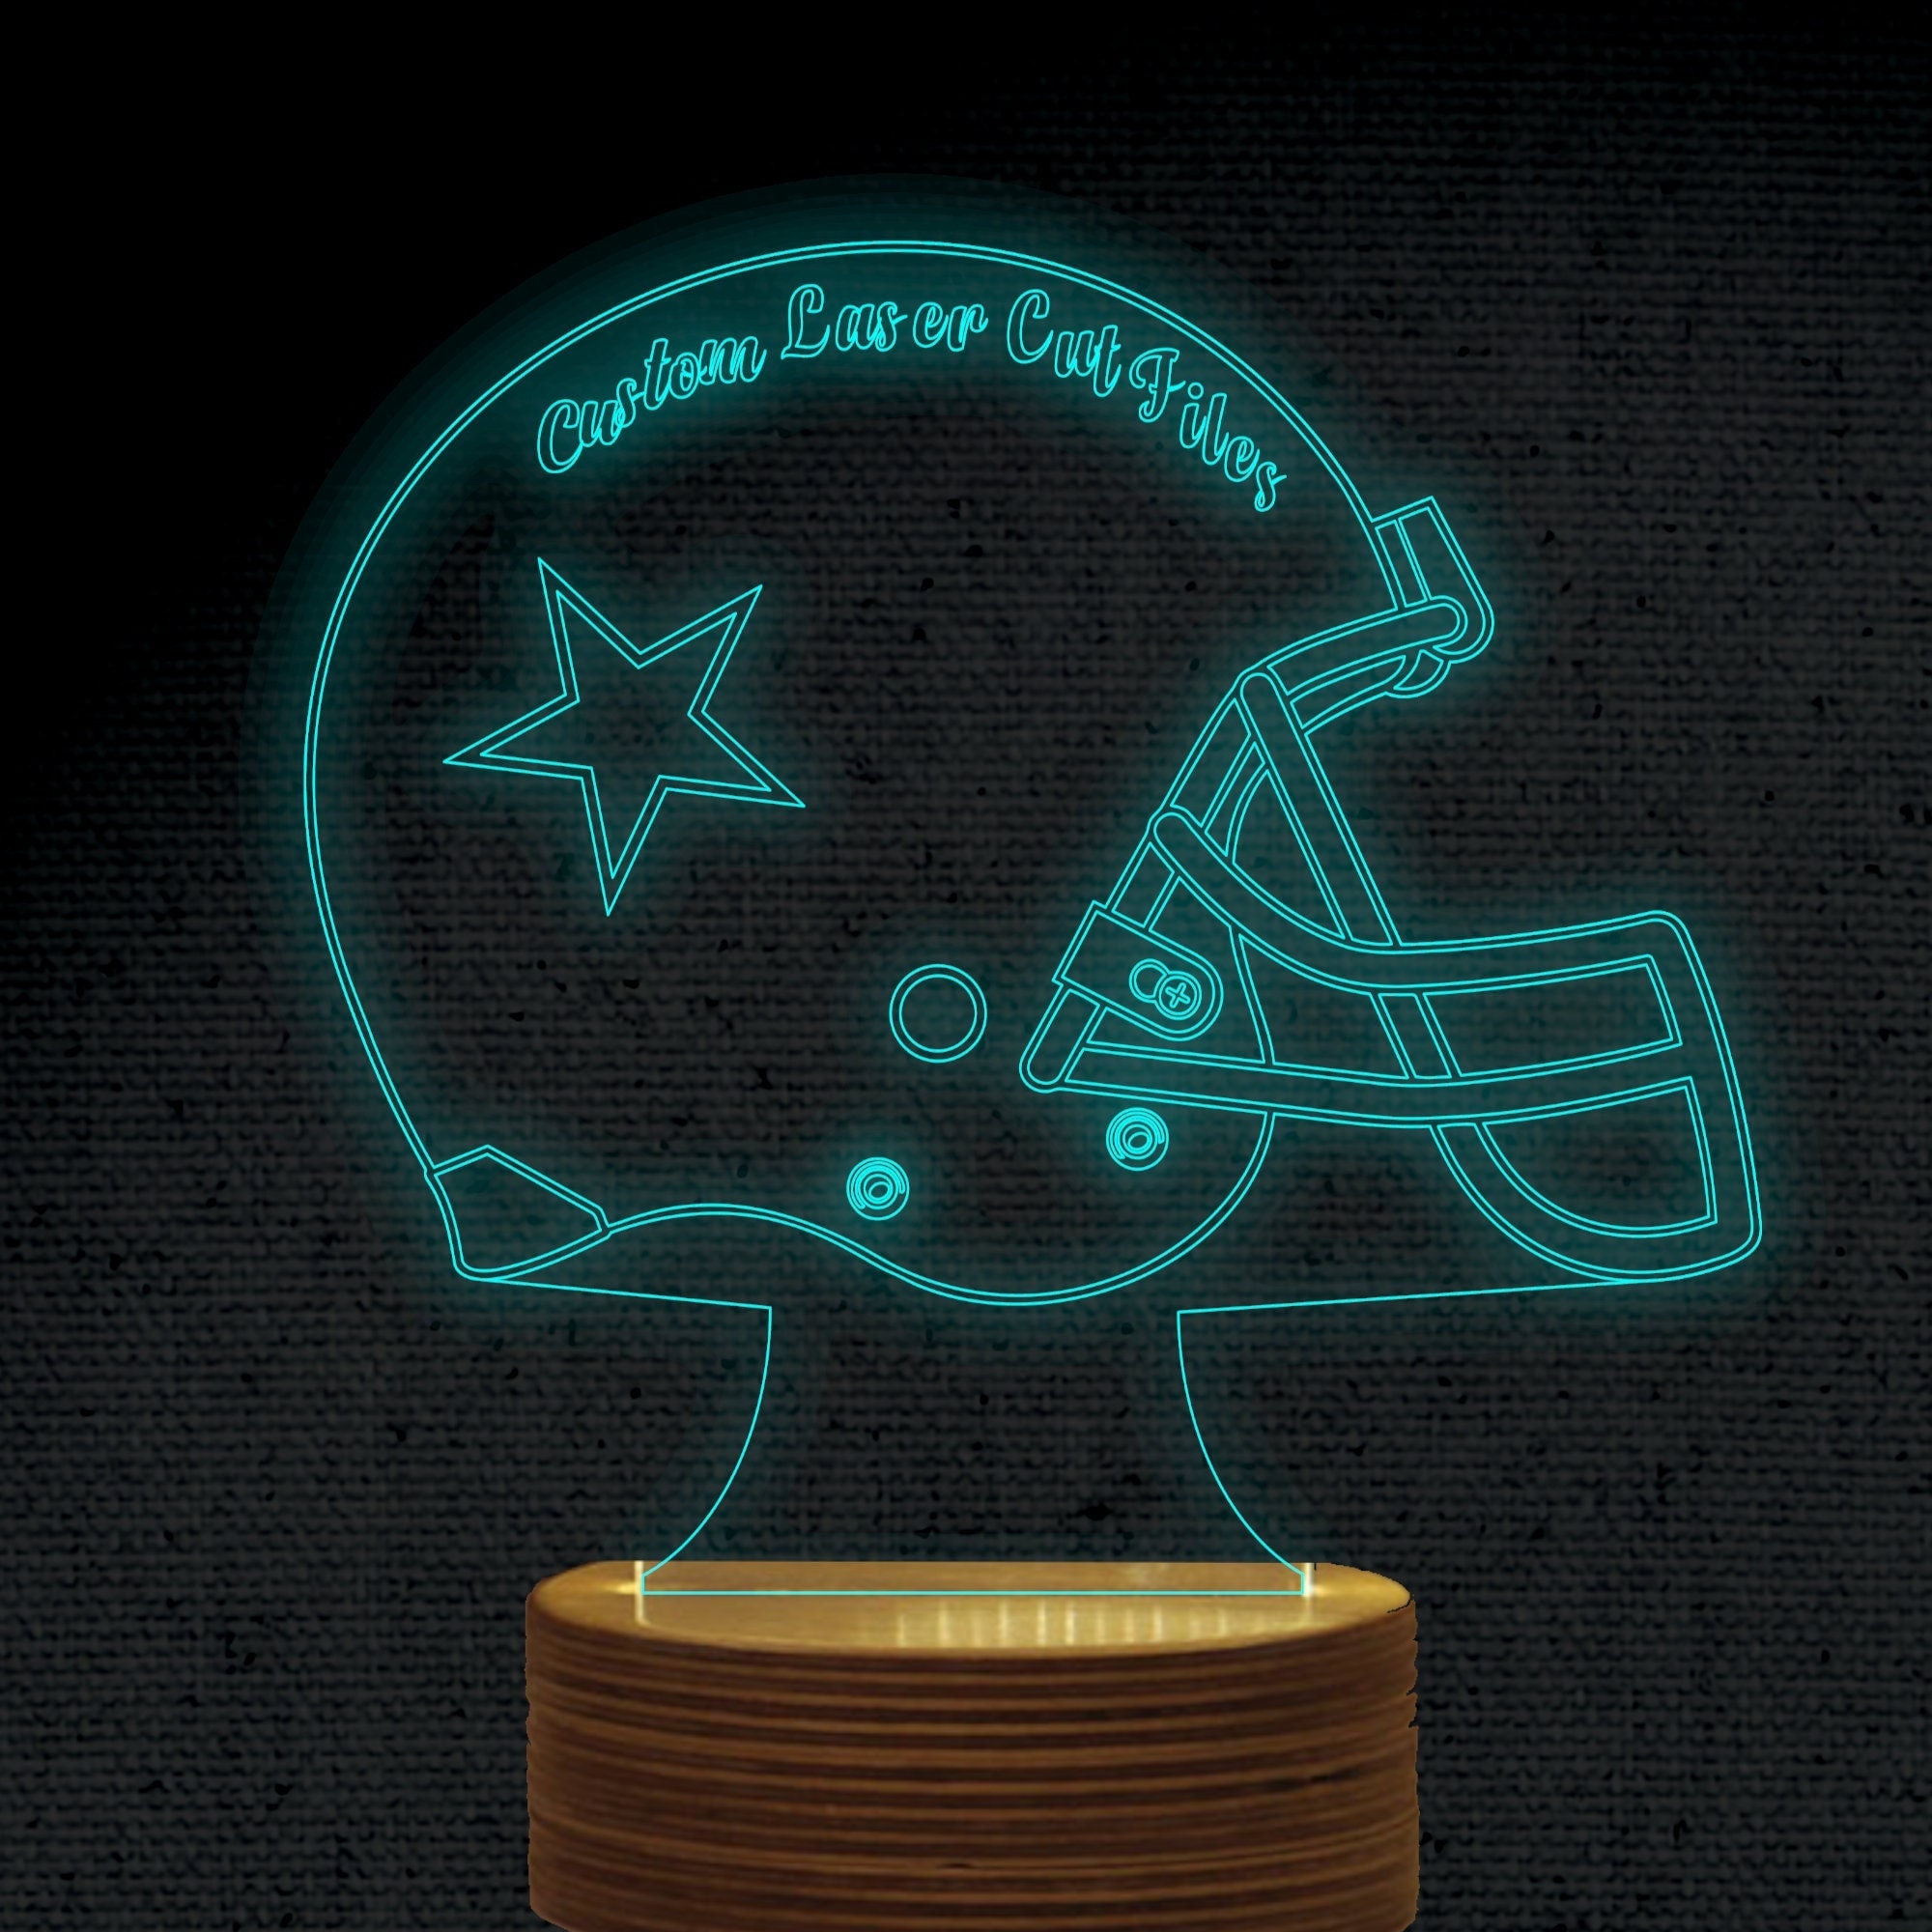 NFL, Accessories, 4 Pittsburgh Steelers Nfl Hologram Spirit Cups